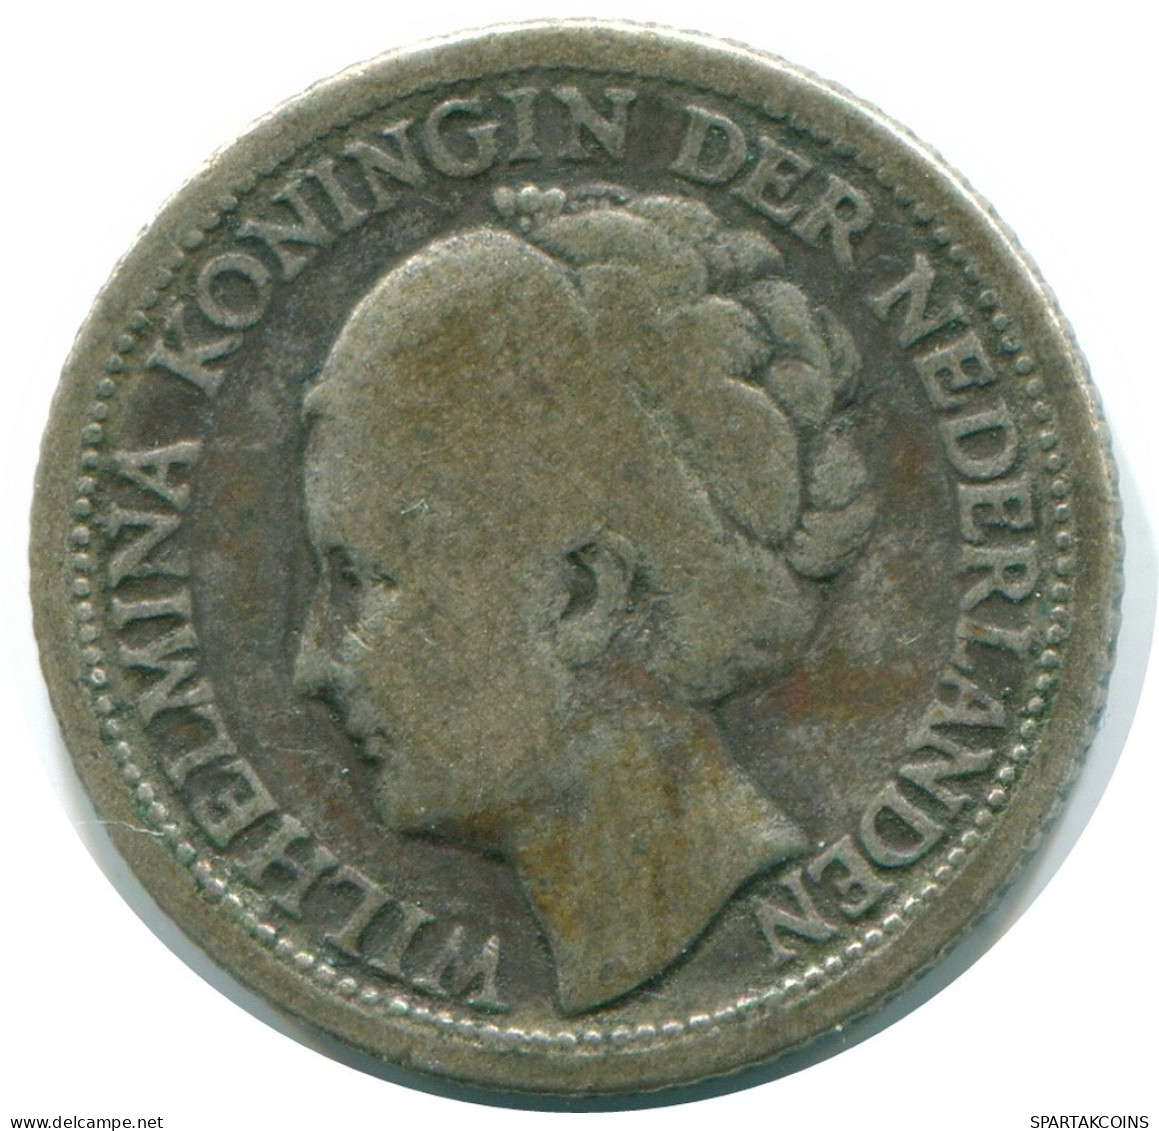 1/4 GULDEN 1944 CURACAO Netherlands SILVER Colonial Coin #NL10702.4.U.A - Curacao